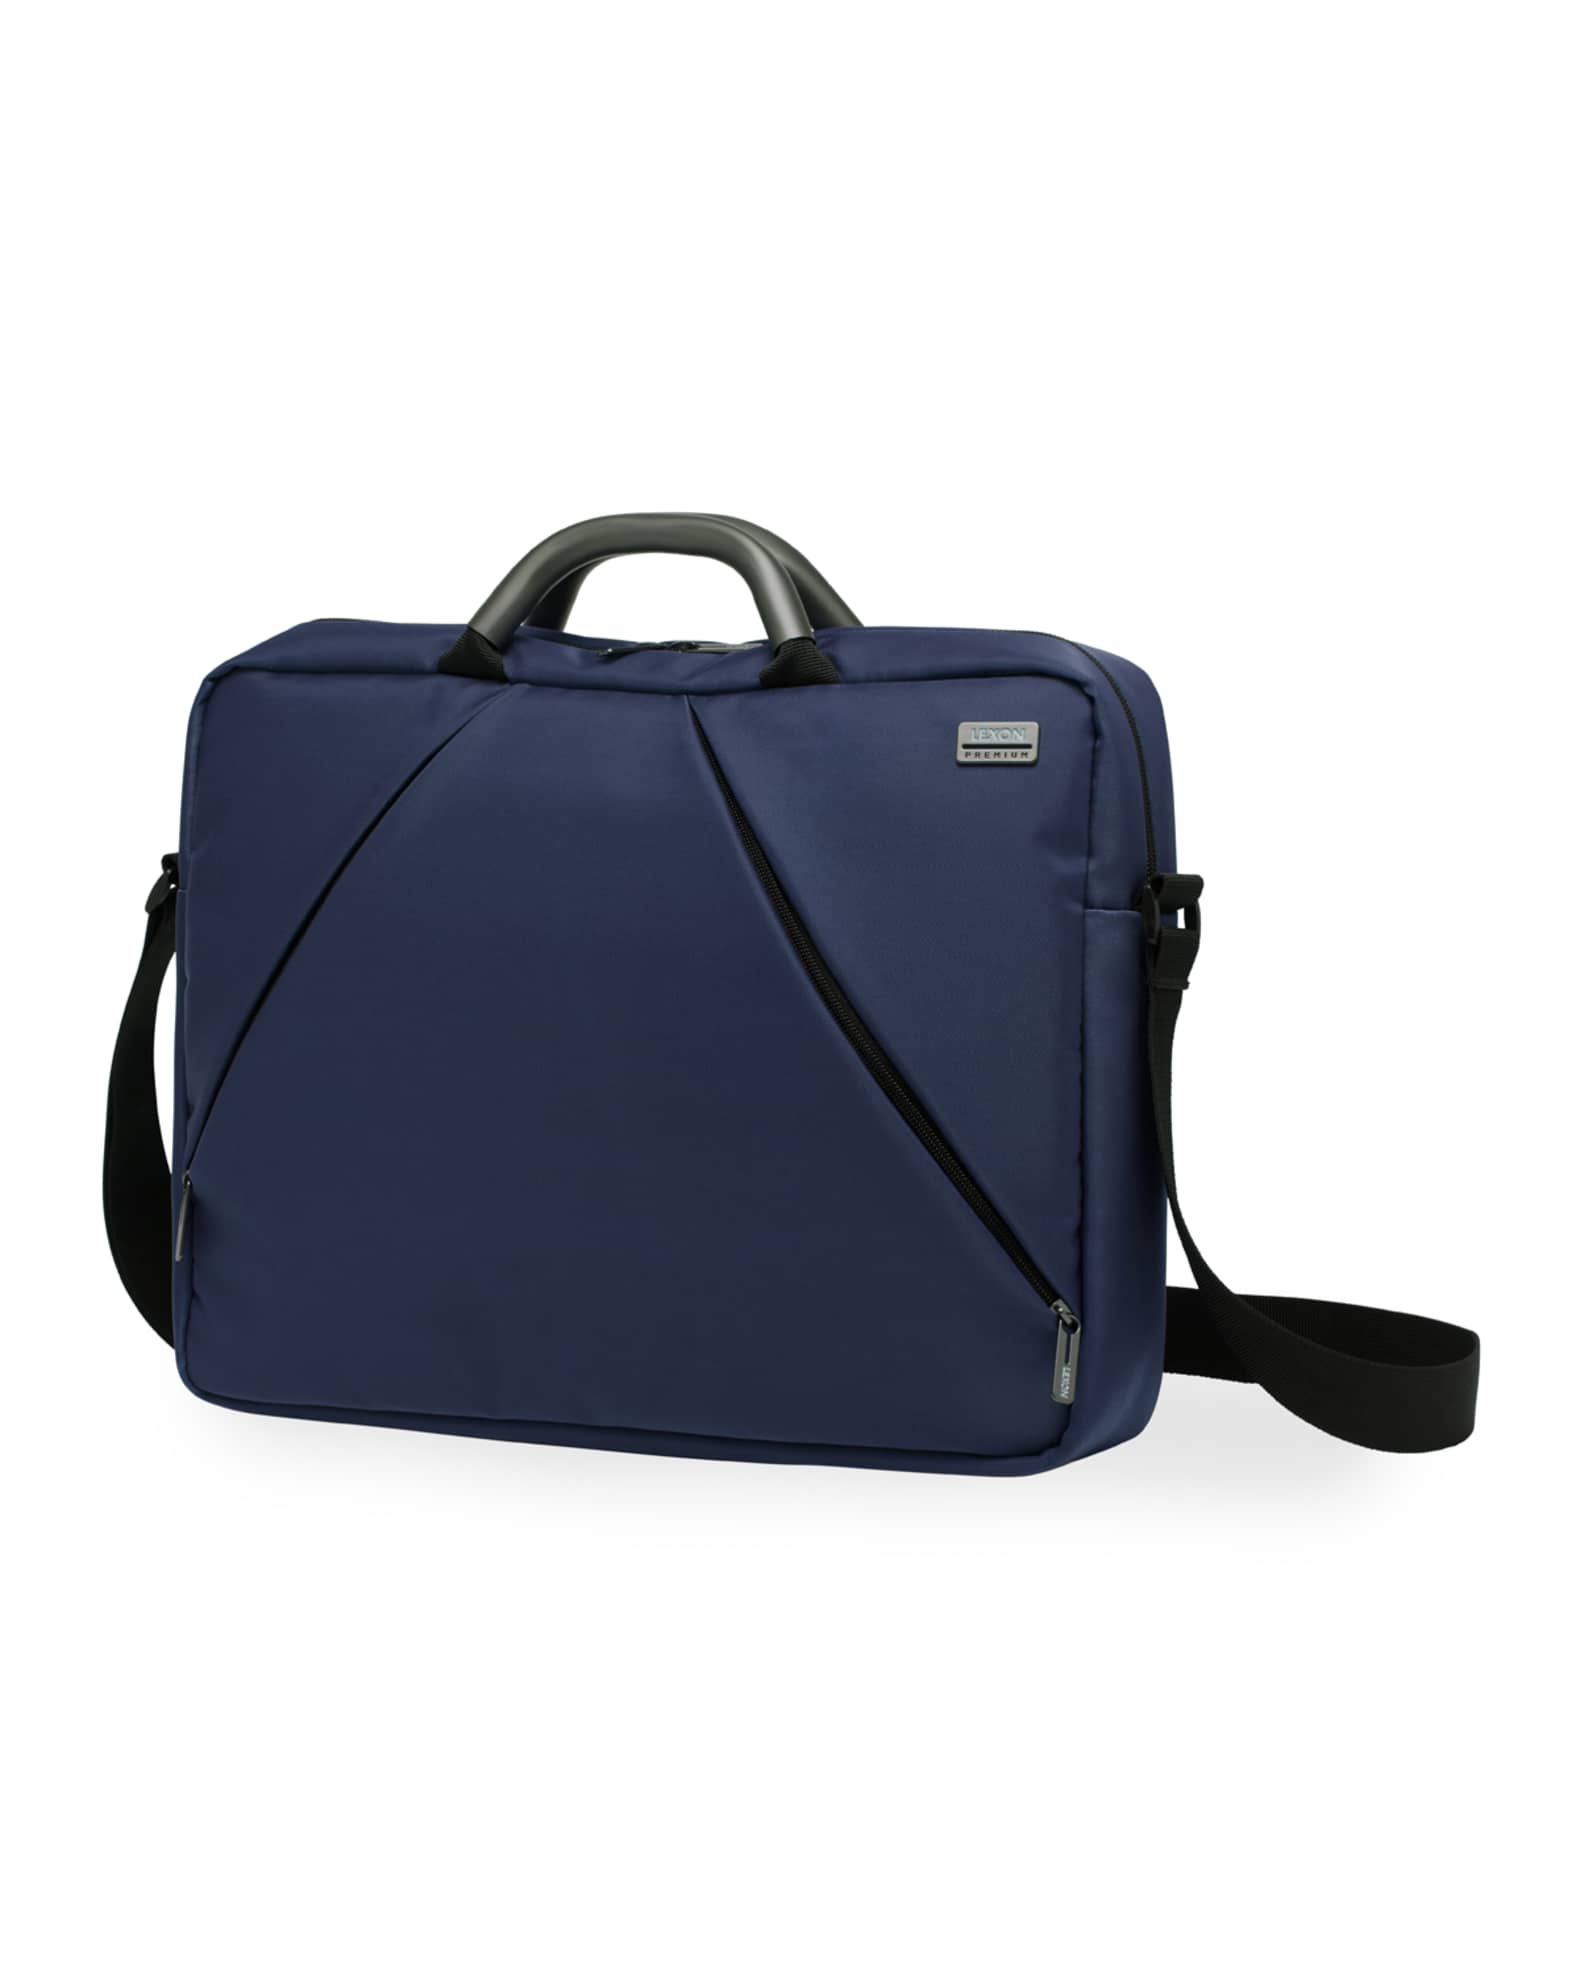 LEXON Premium+ Large Laptop Bag | Neiman Marcus